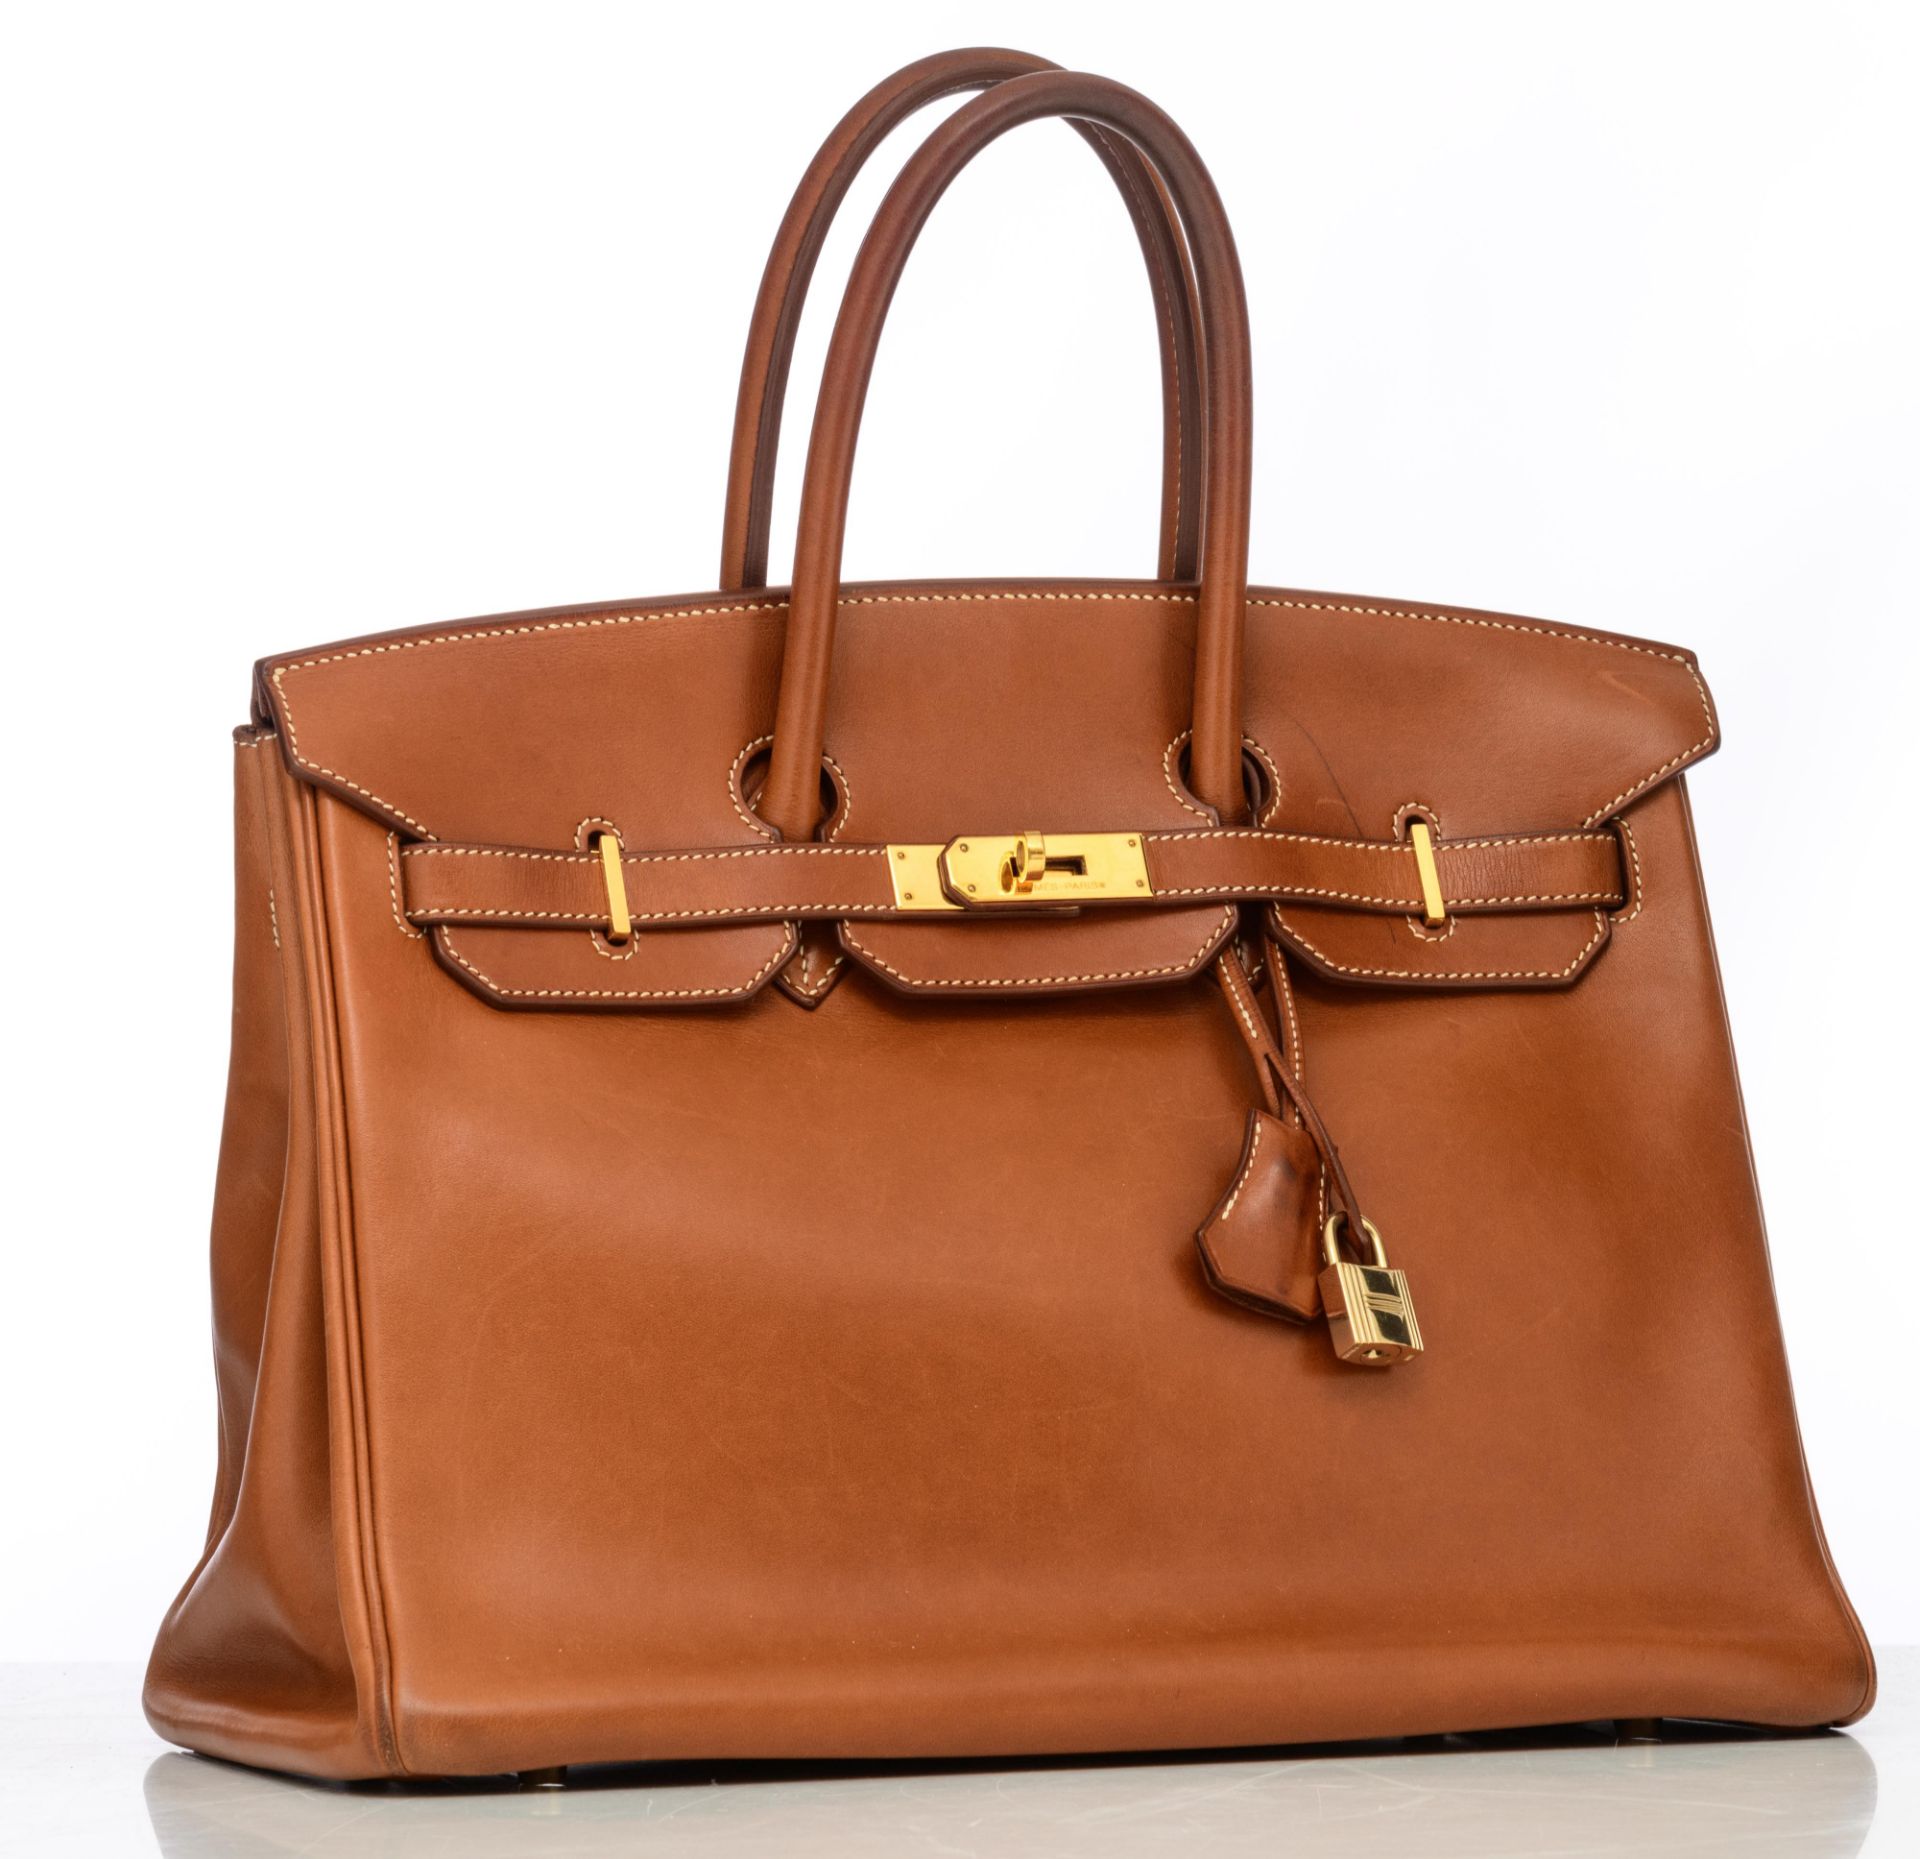 HERMÈS, Birkin 35 bag, Gold Barenia calfskin leather, with gilt metal hardware - Image 2 of 23